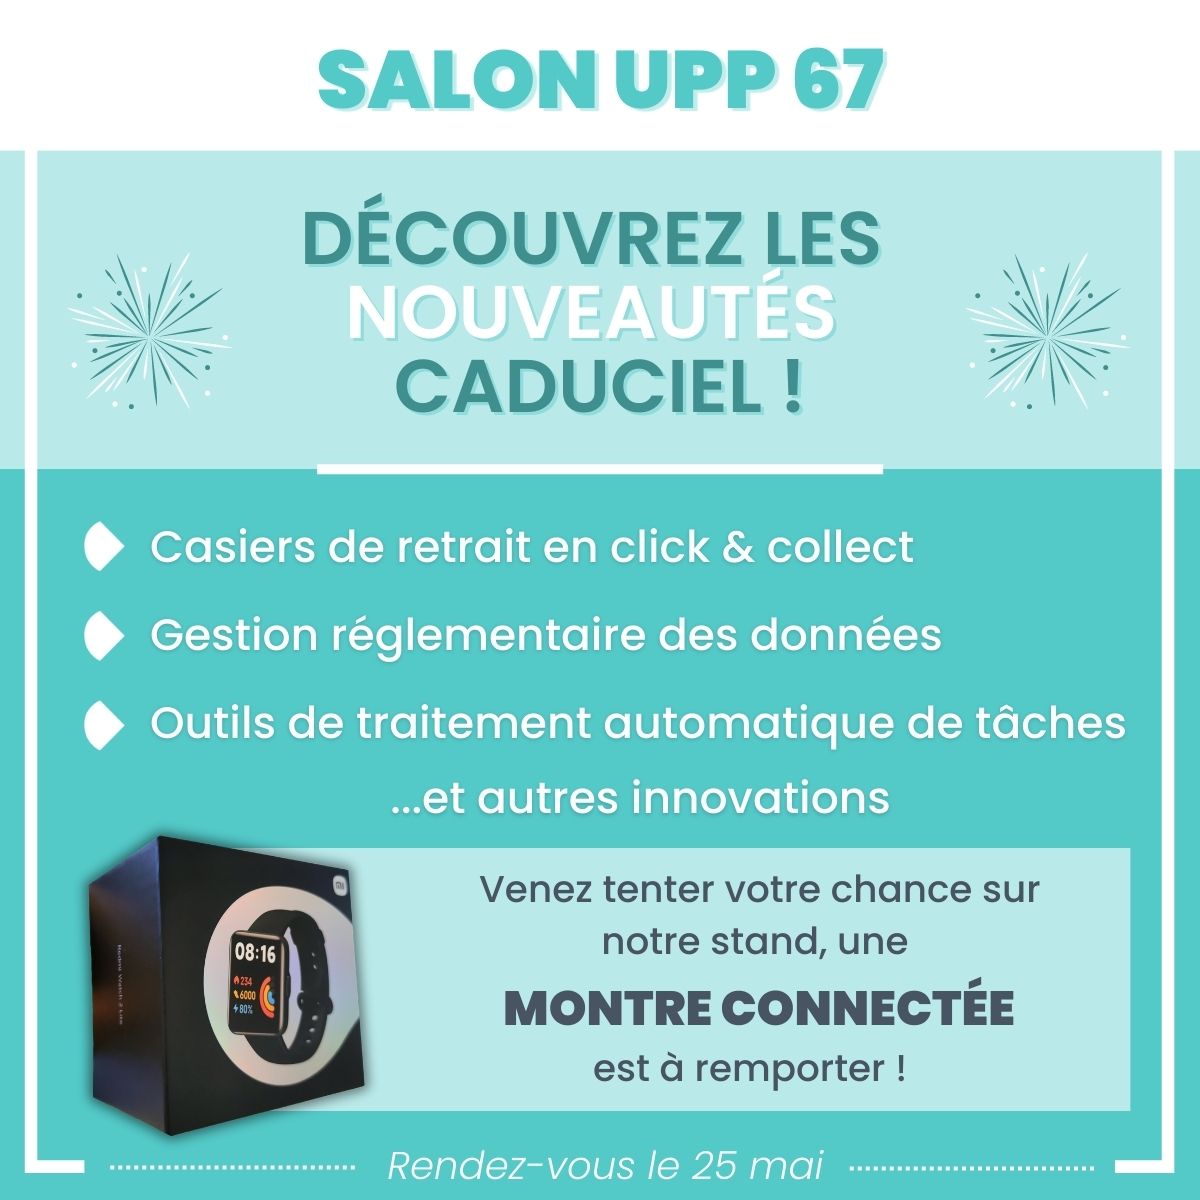 Salon UPP 67 !